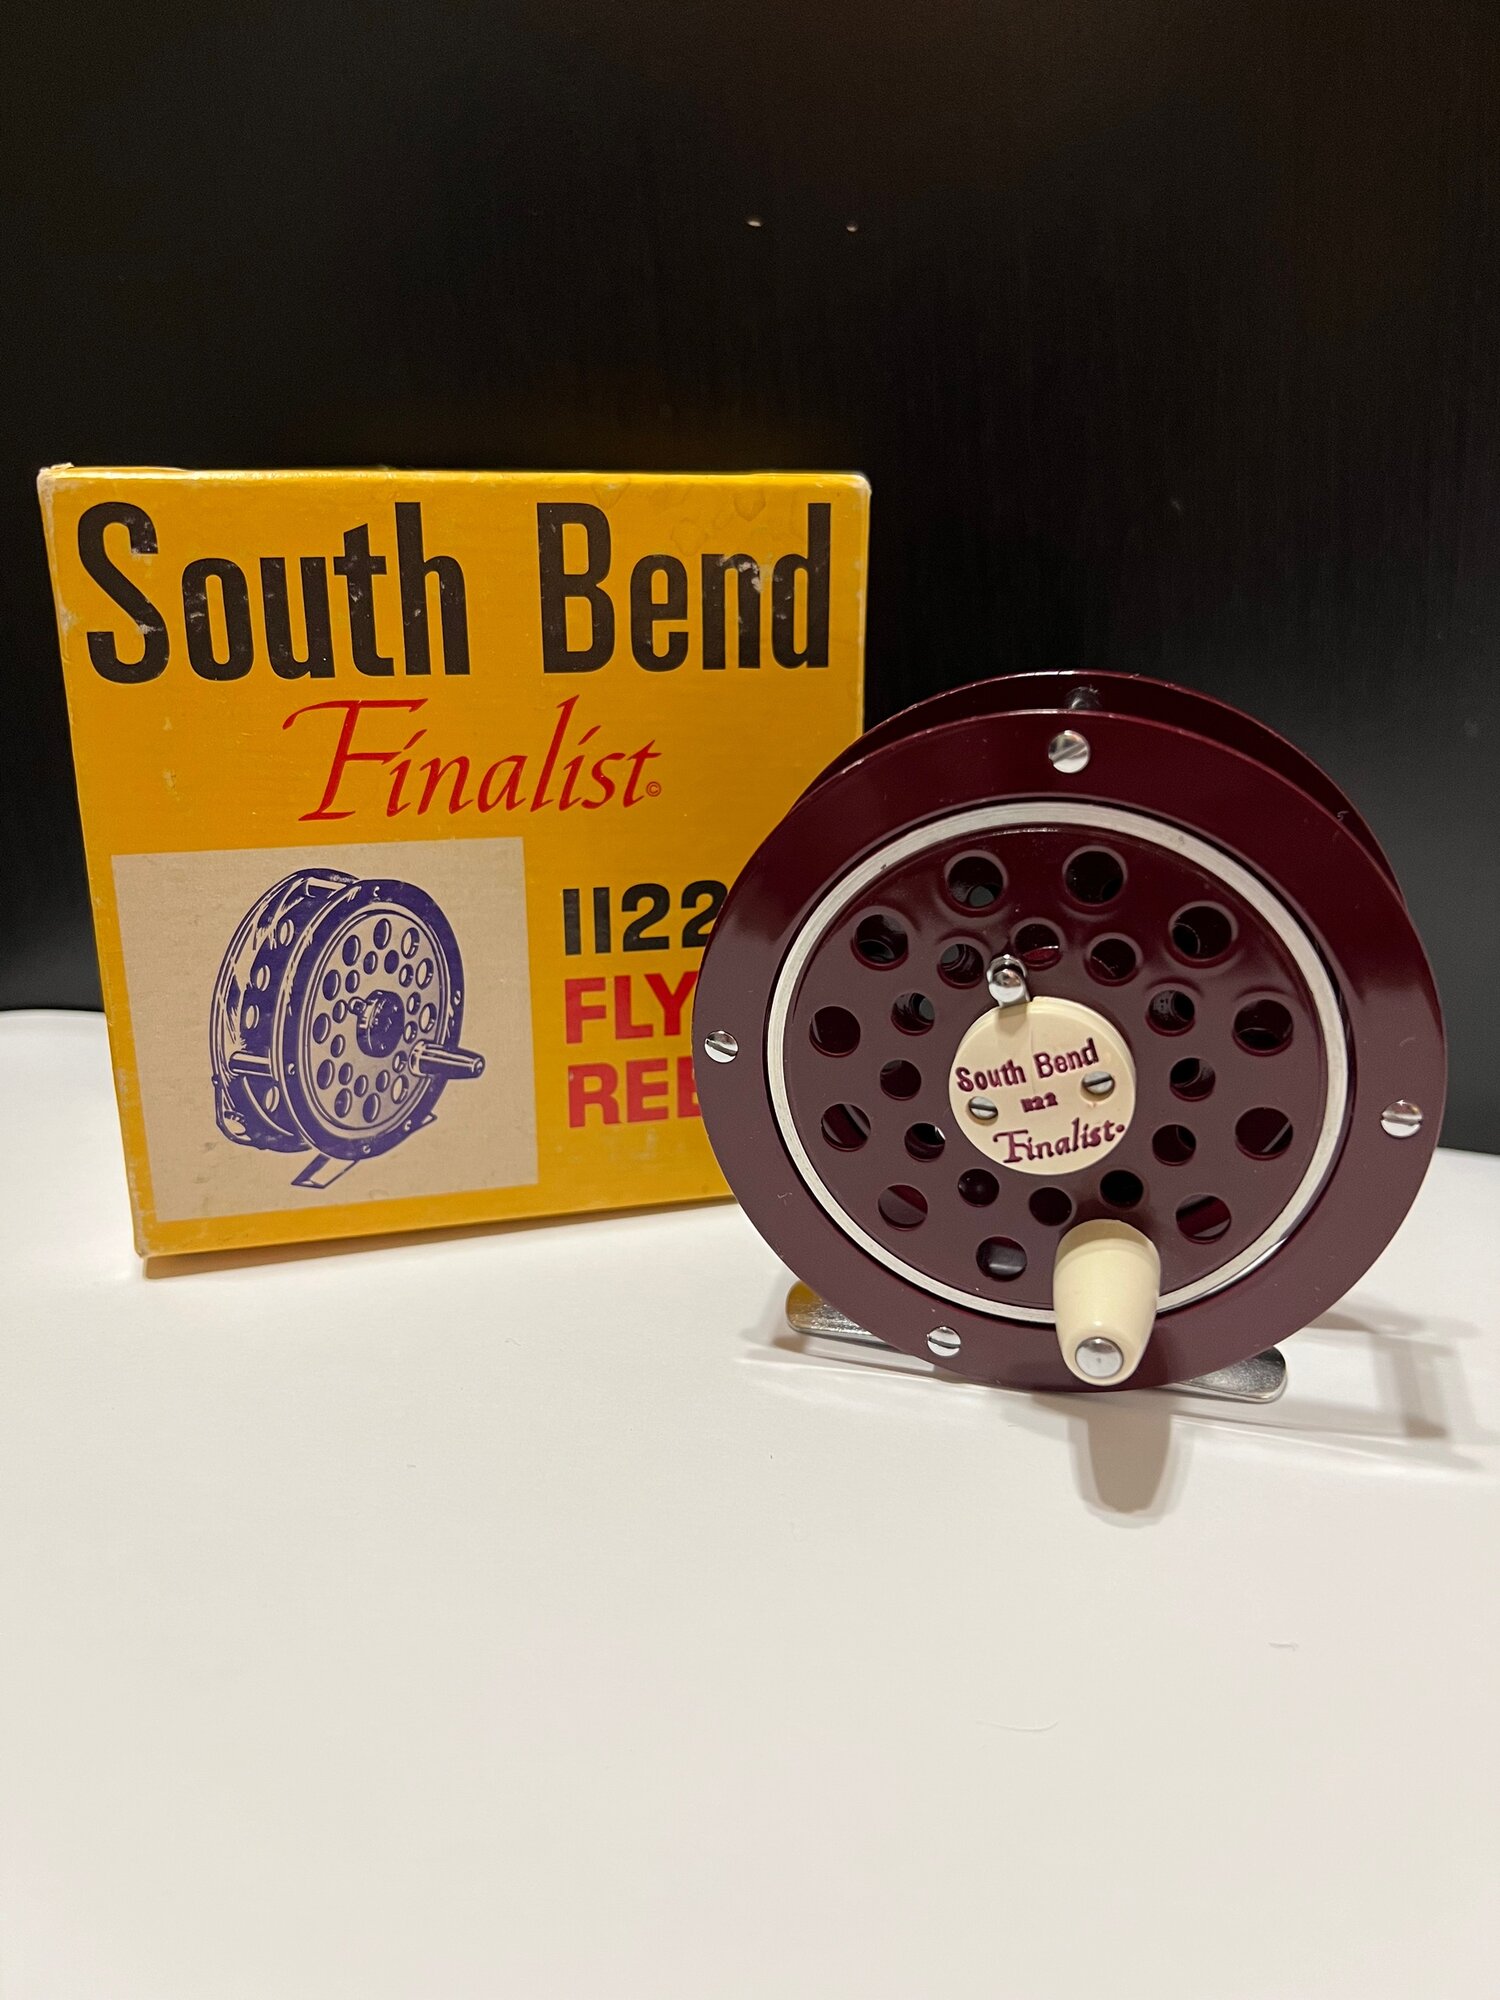 South Bend Finalist Fly Reel No. 1122 with original Box Circa